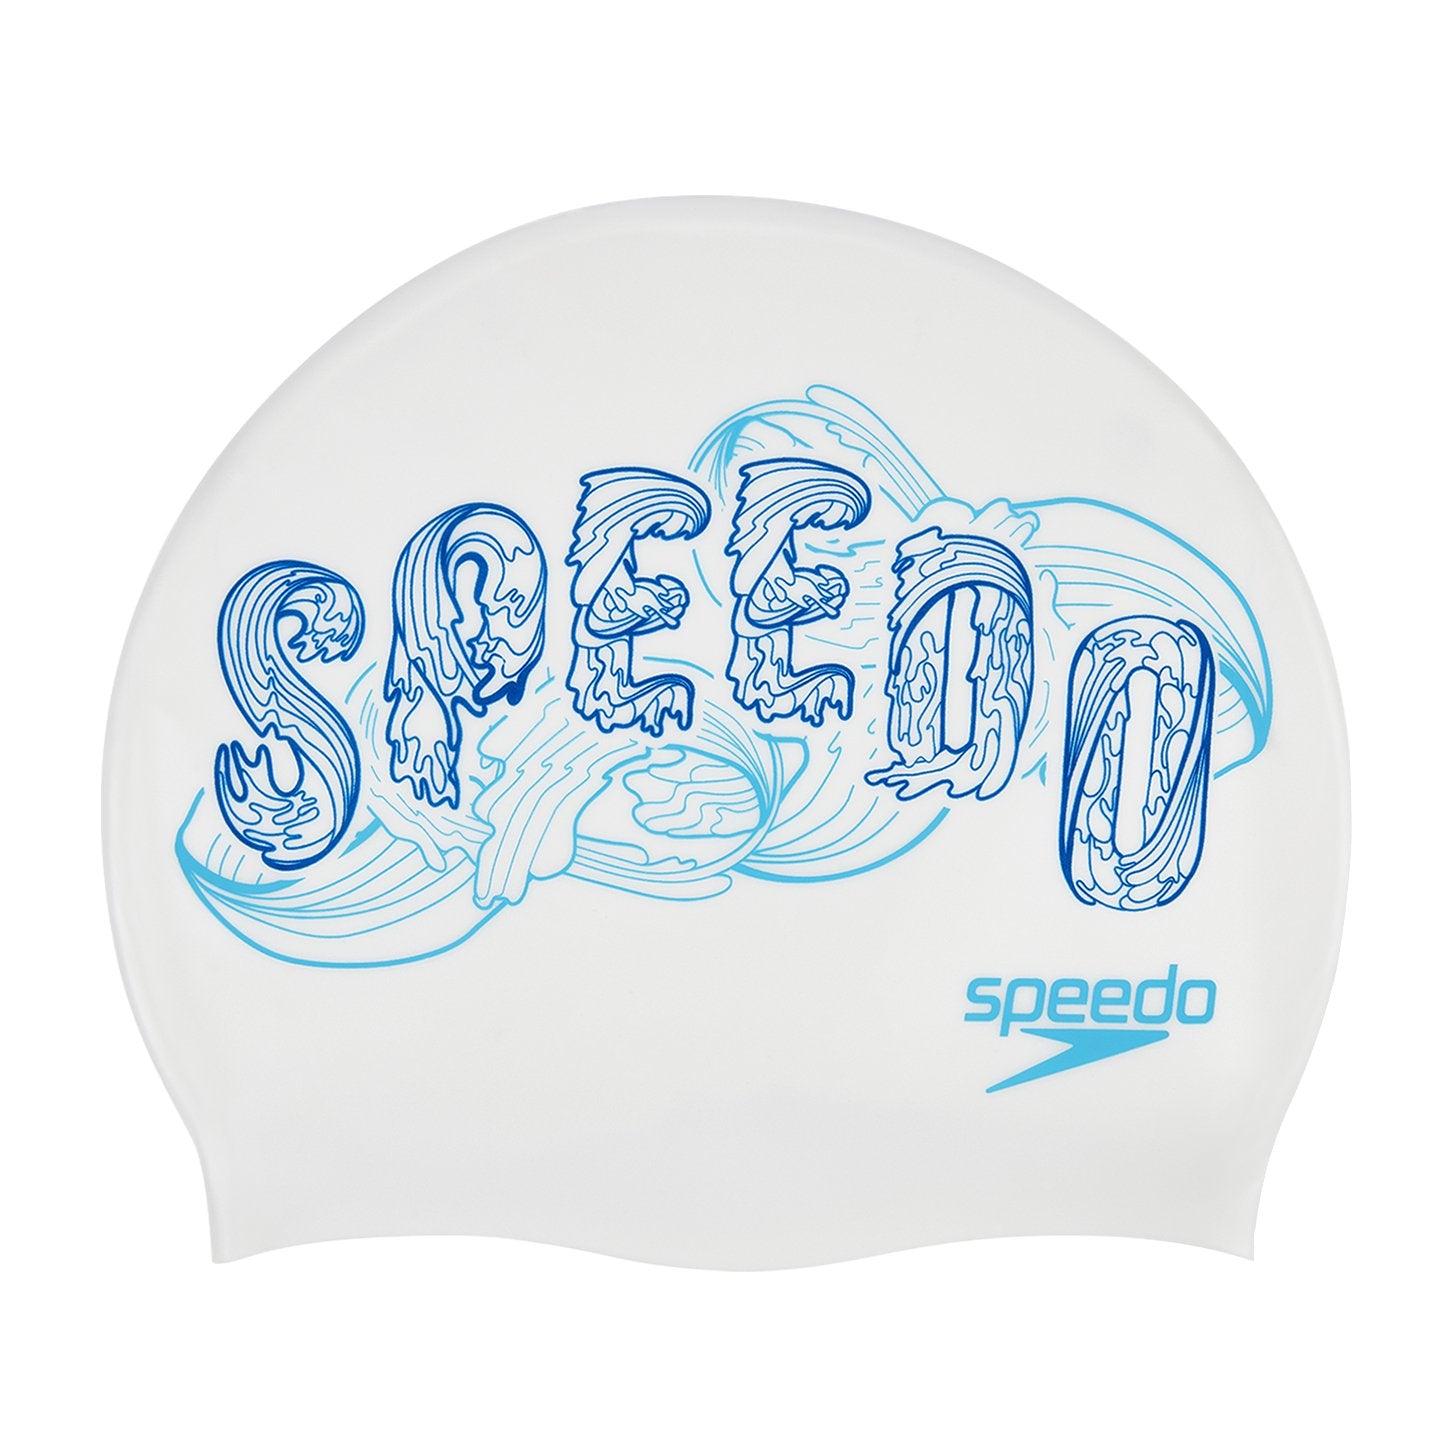 Speedo Slogan Print Swimming Cap, Free Size (White/Blue) - Best Price online Prokicksports.com